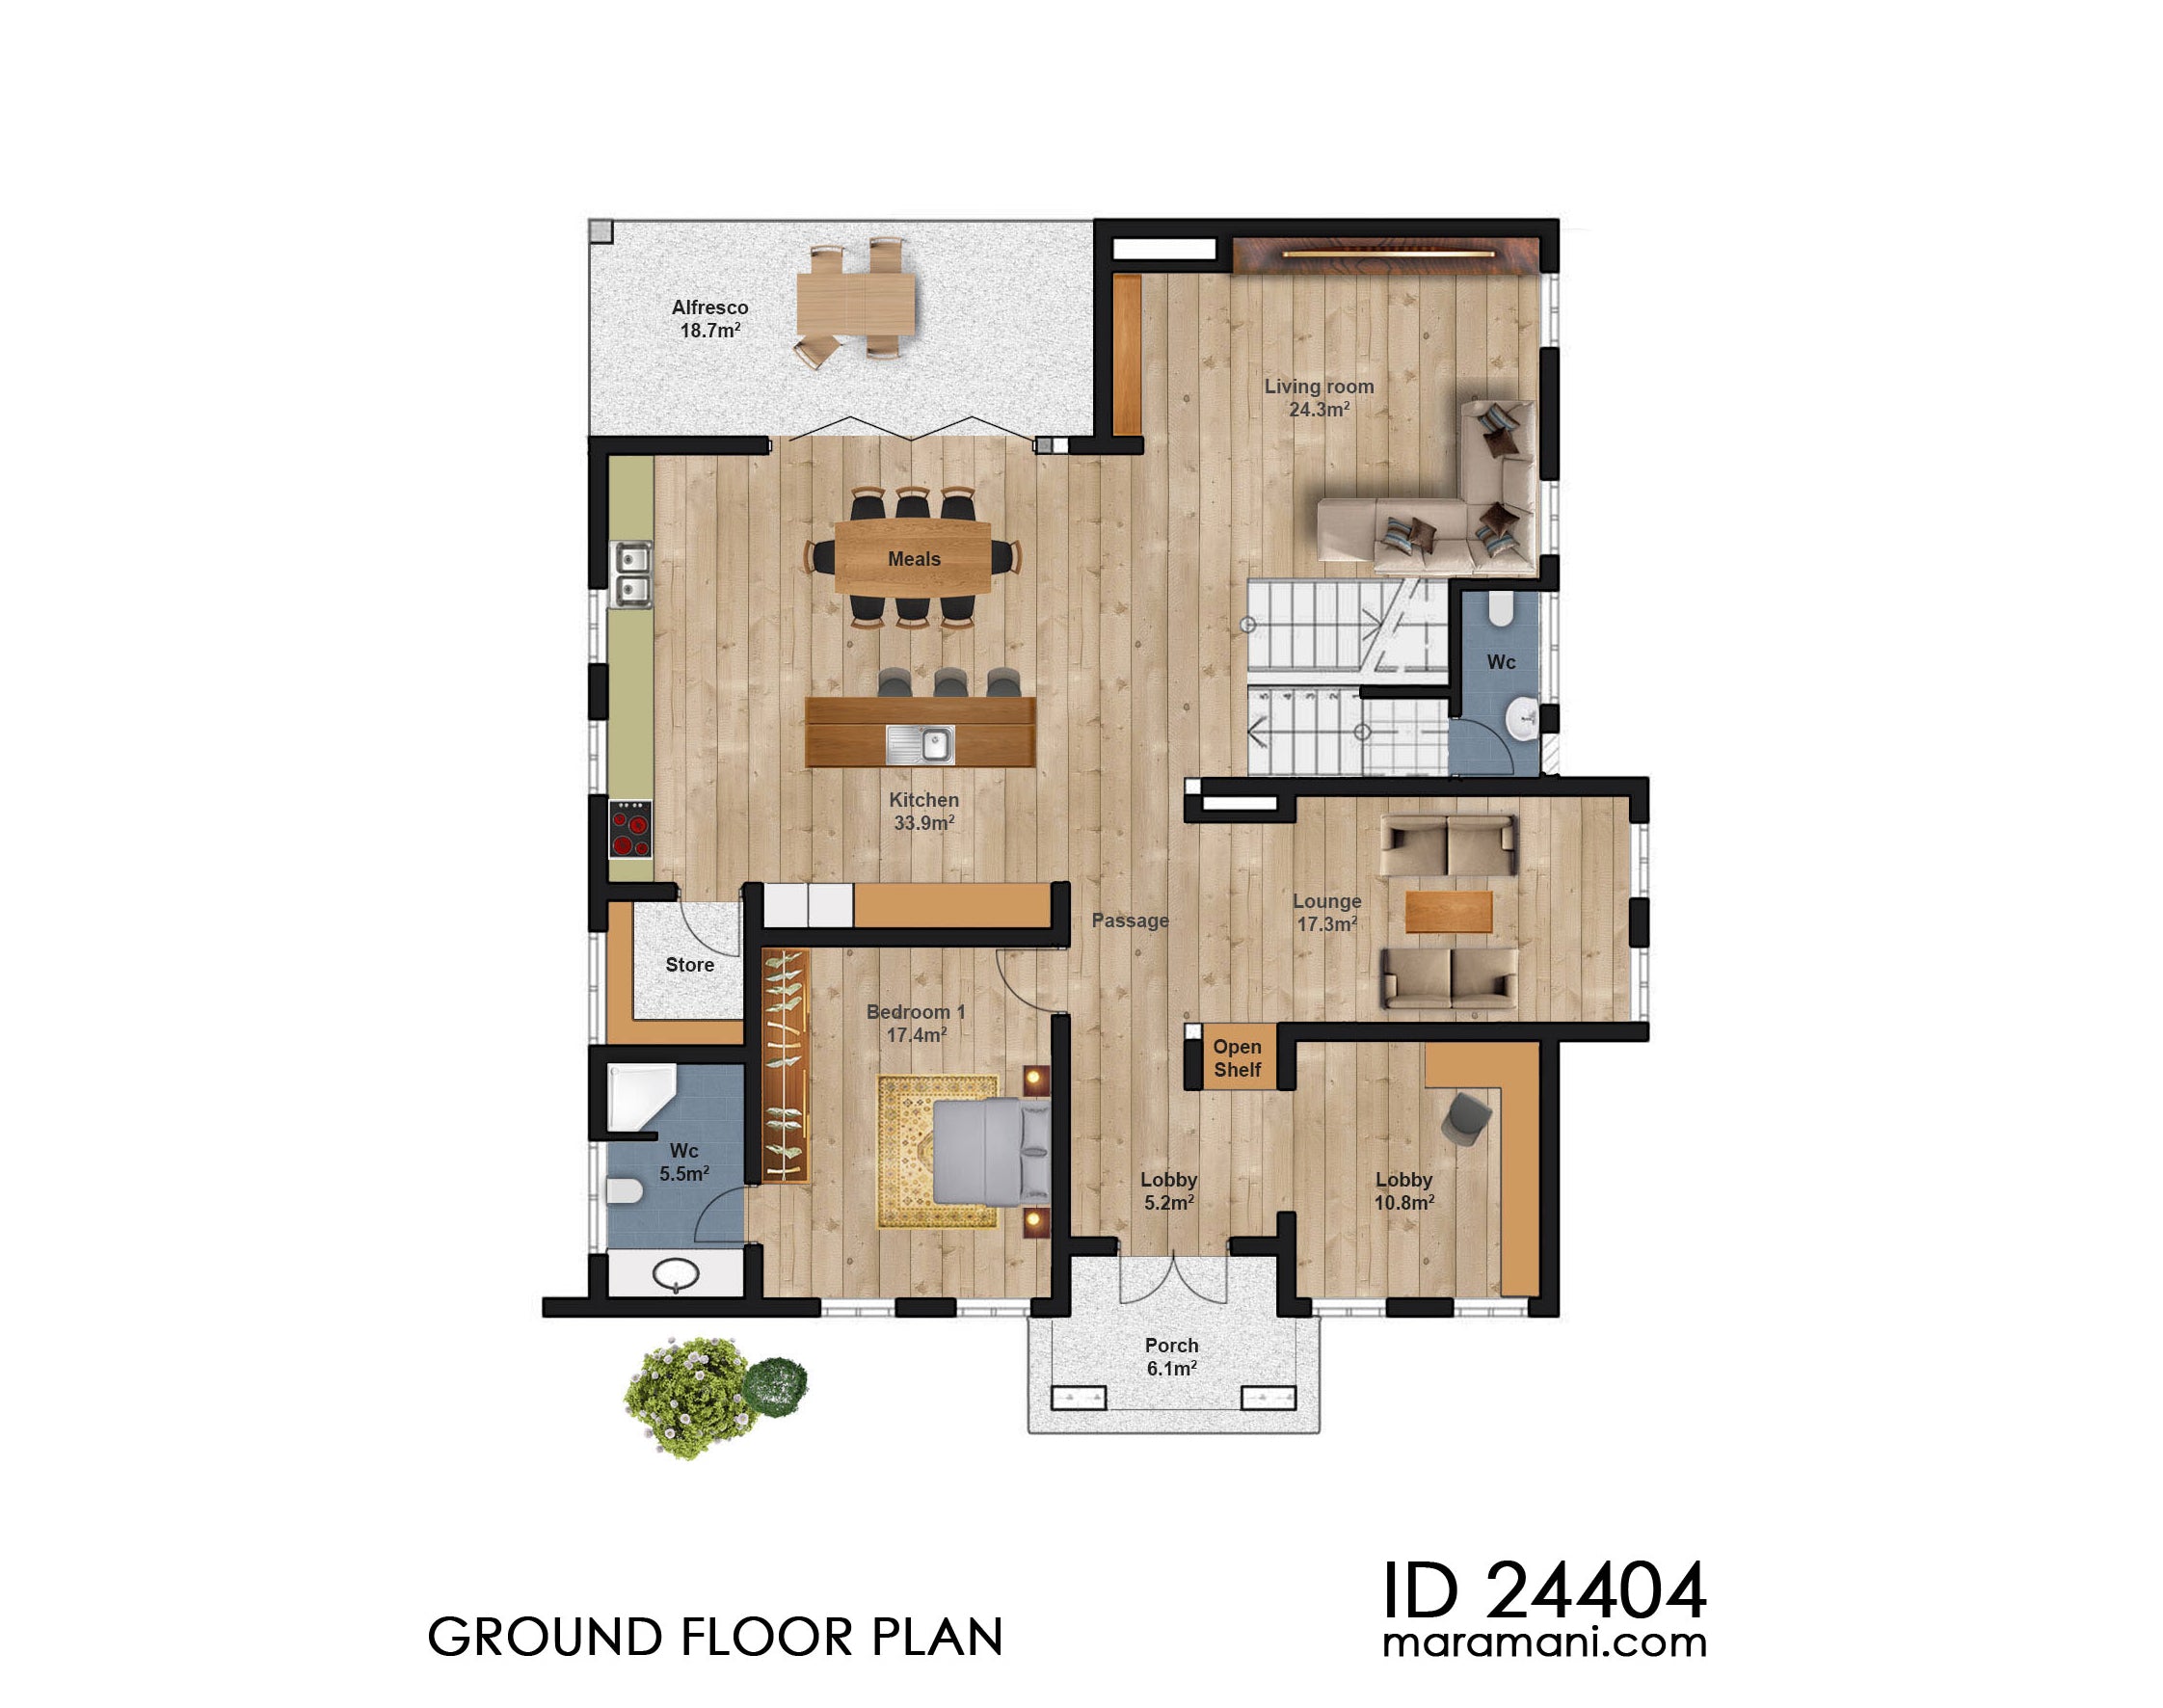 4 Bedroom Modern House Plan - ID 24404